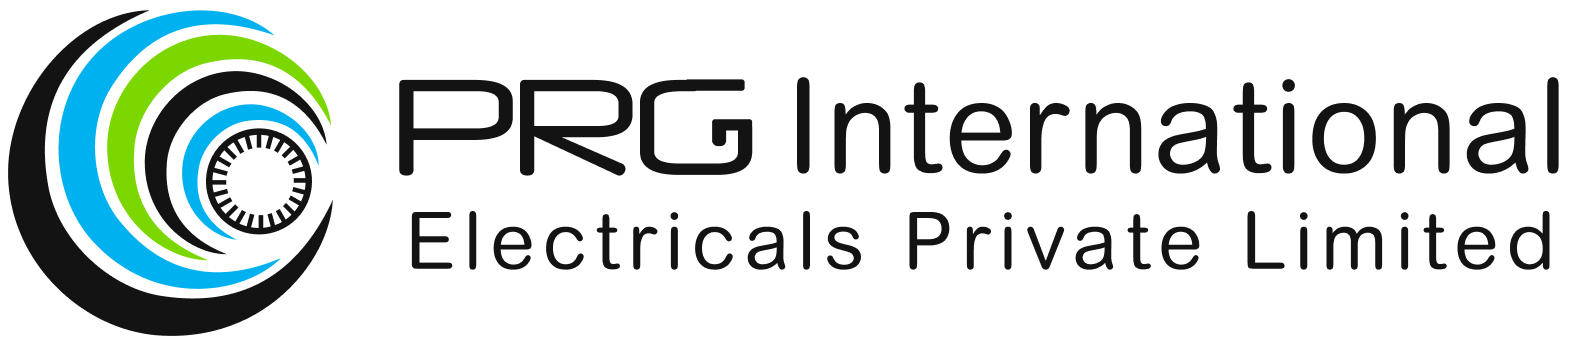 PRG INTERNATIONAL ELECTRICALS PVT LTD